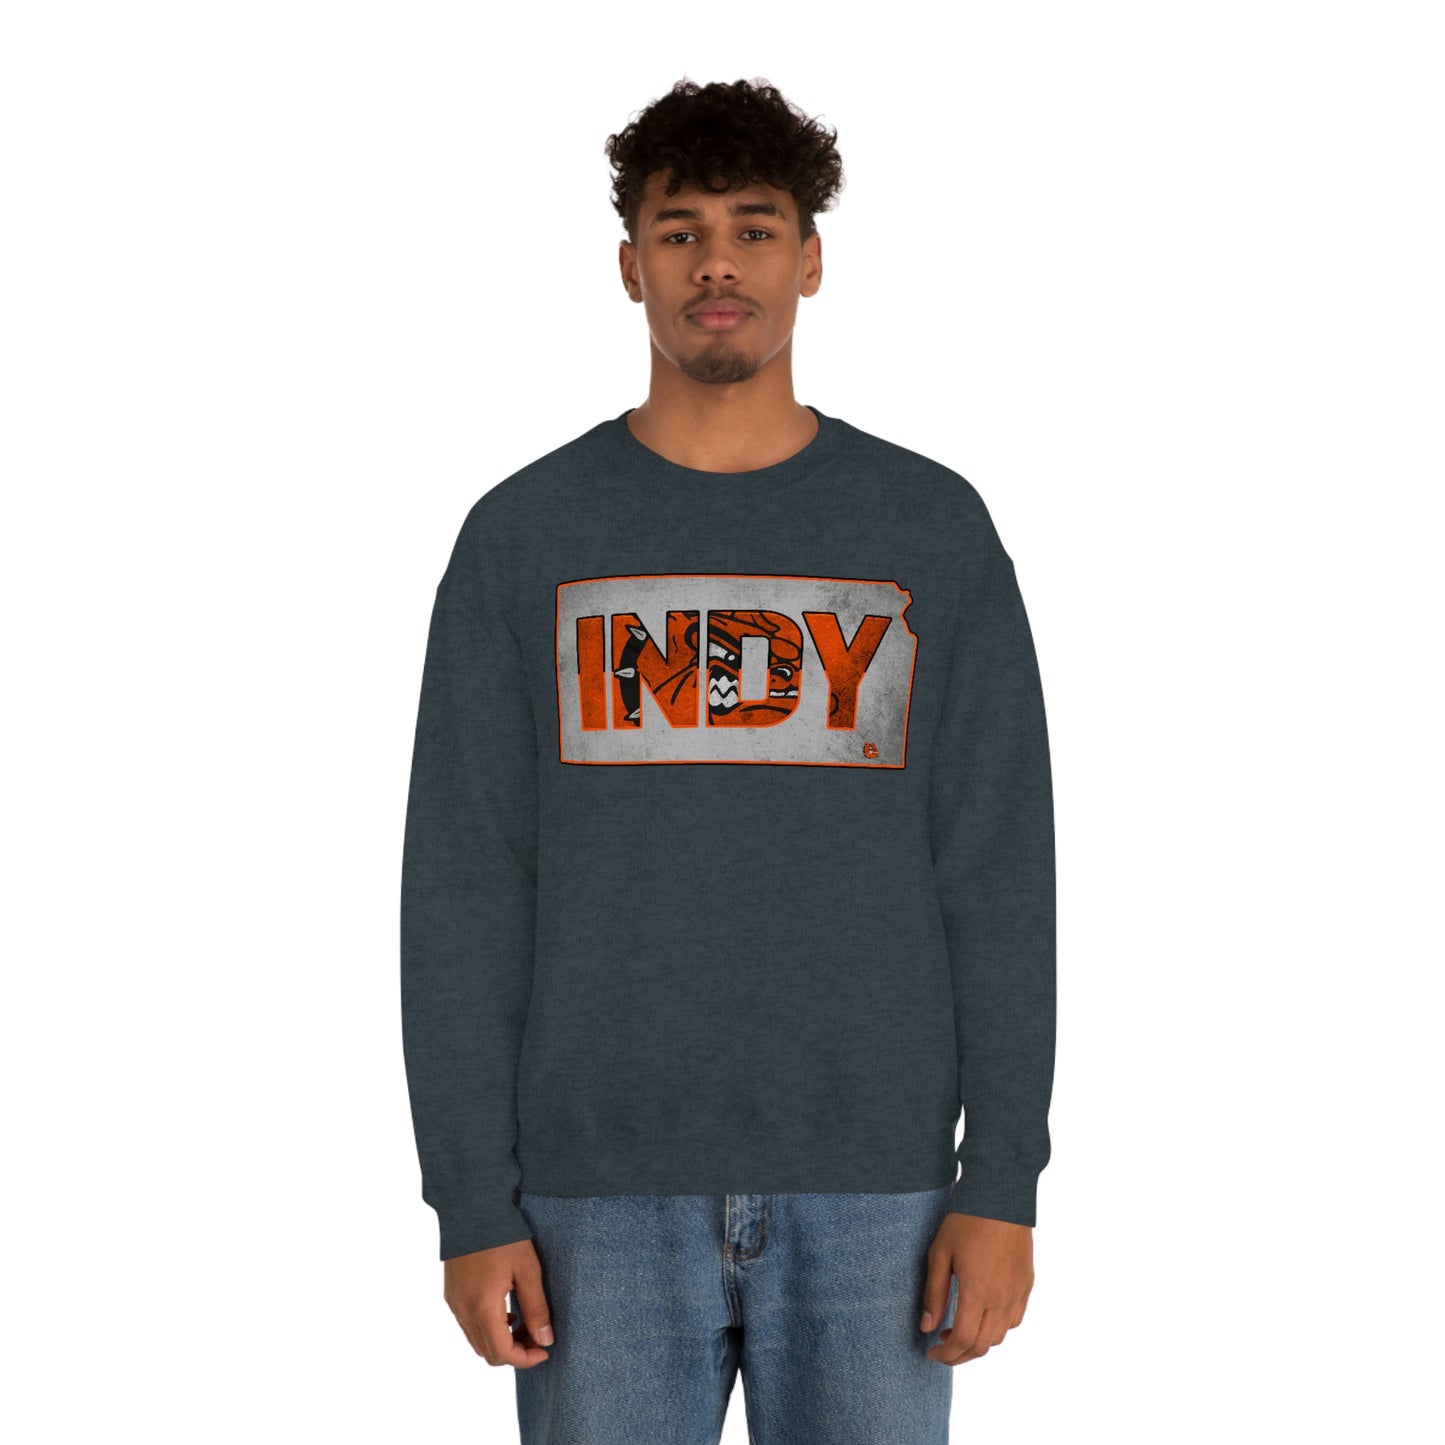 Indy KS - Crewneck Sweatshirt